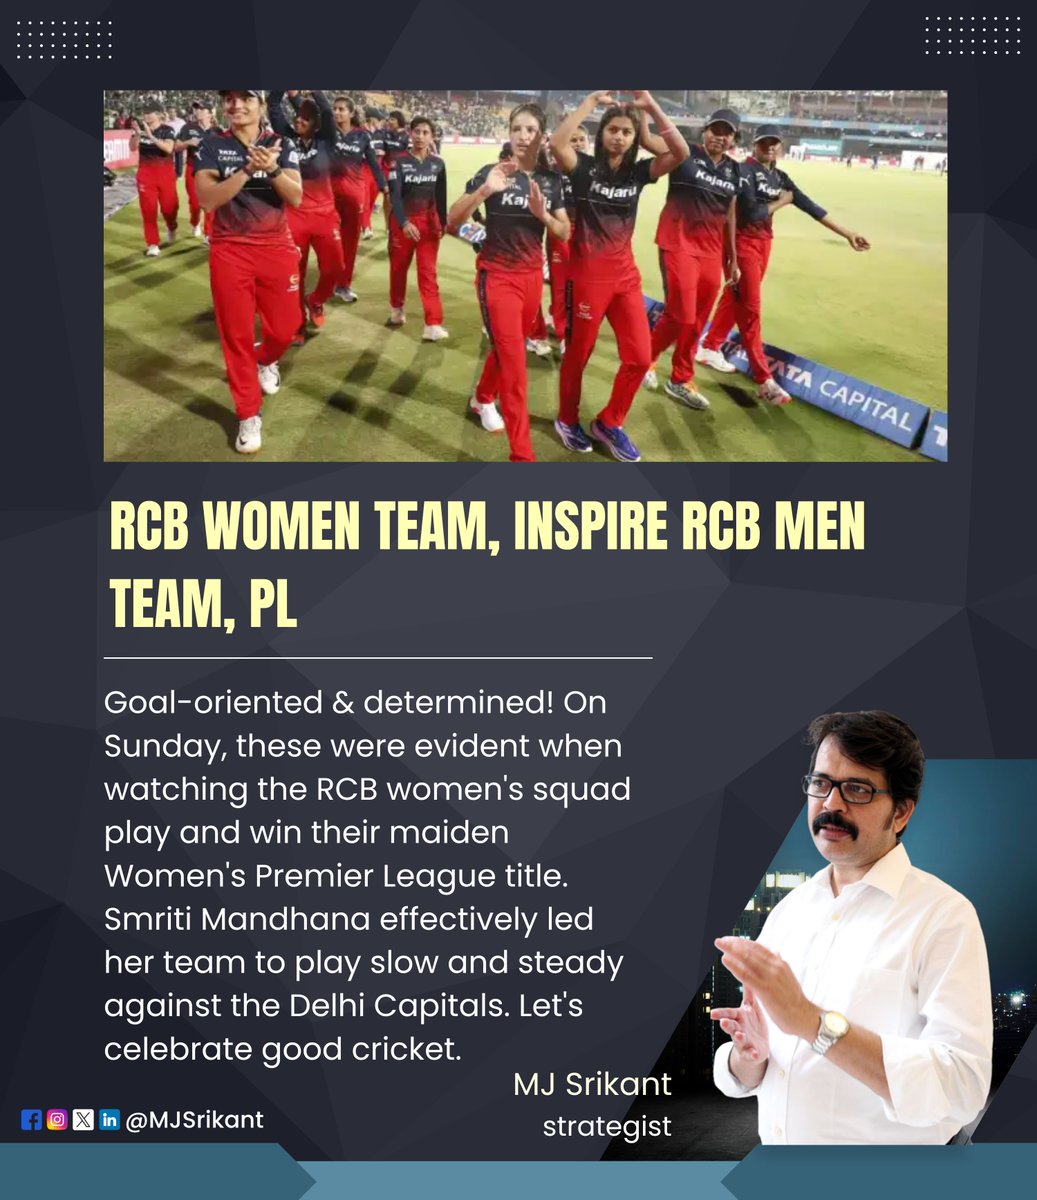 RCB Women Team, Inspire RCB Men Team, pl 

#RCBWomen #InspireRCBMen #GoalOriented #Determined #WomensPremierLeague #RCB #Cricket #SmritiMandhana #GoodCricket #Champions